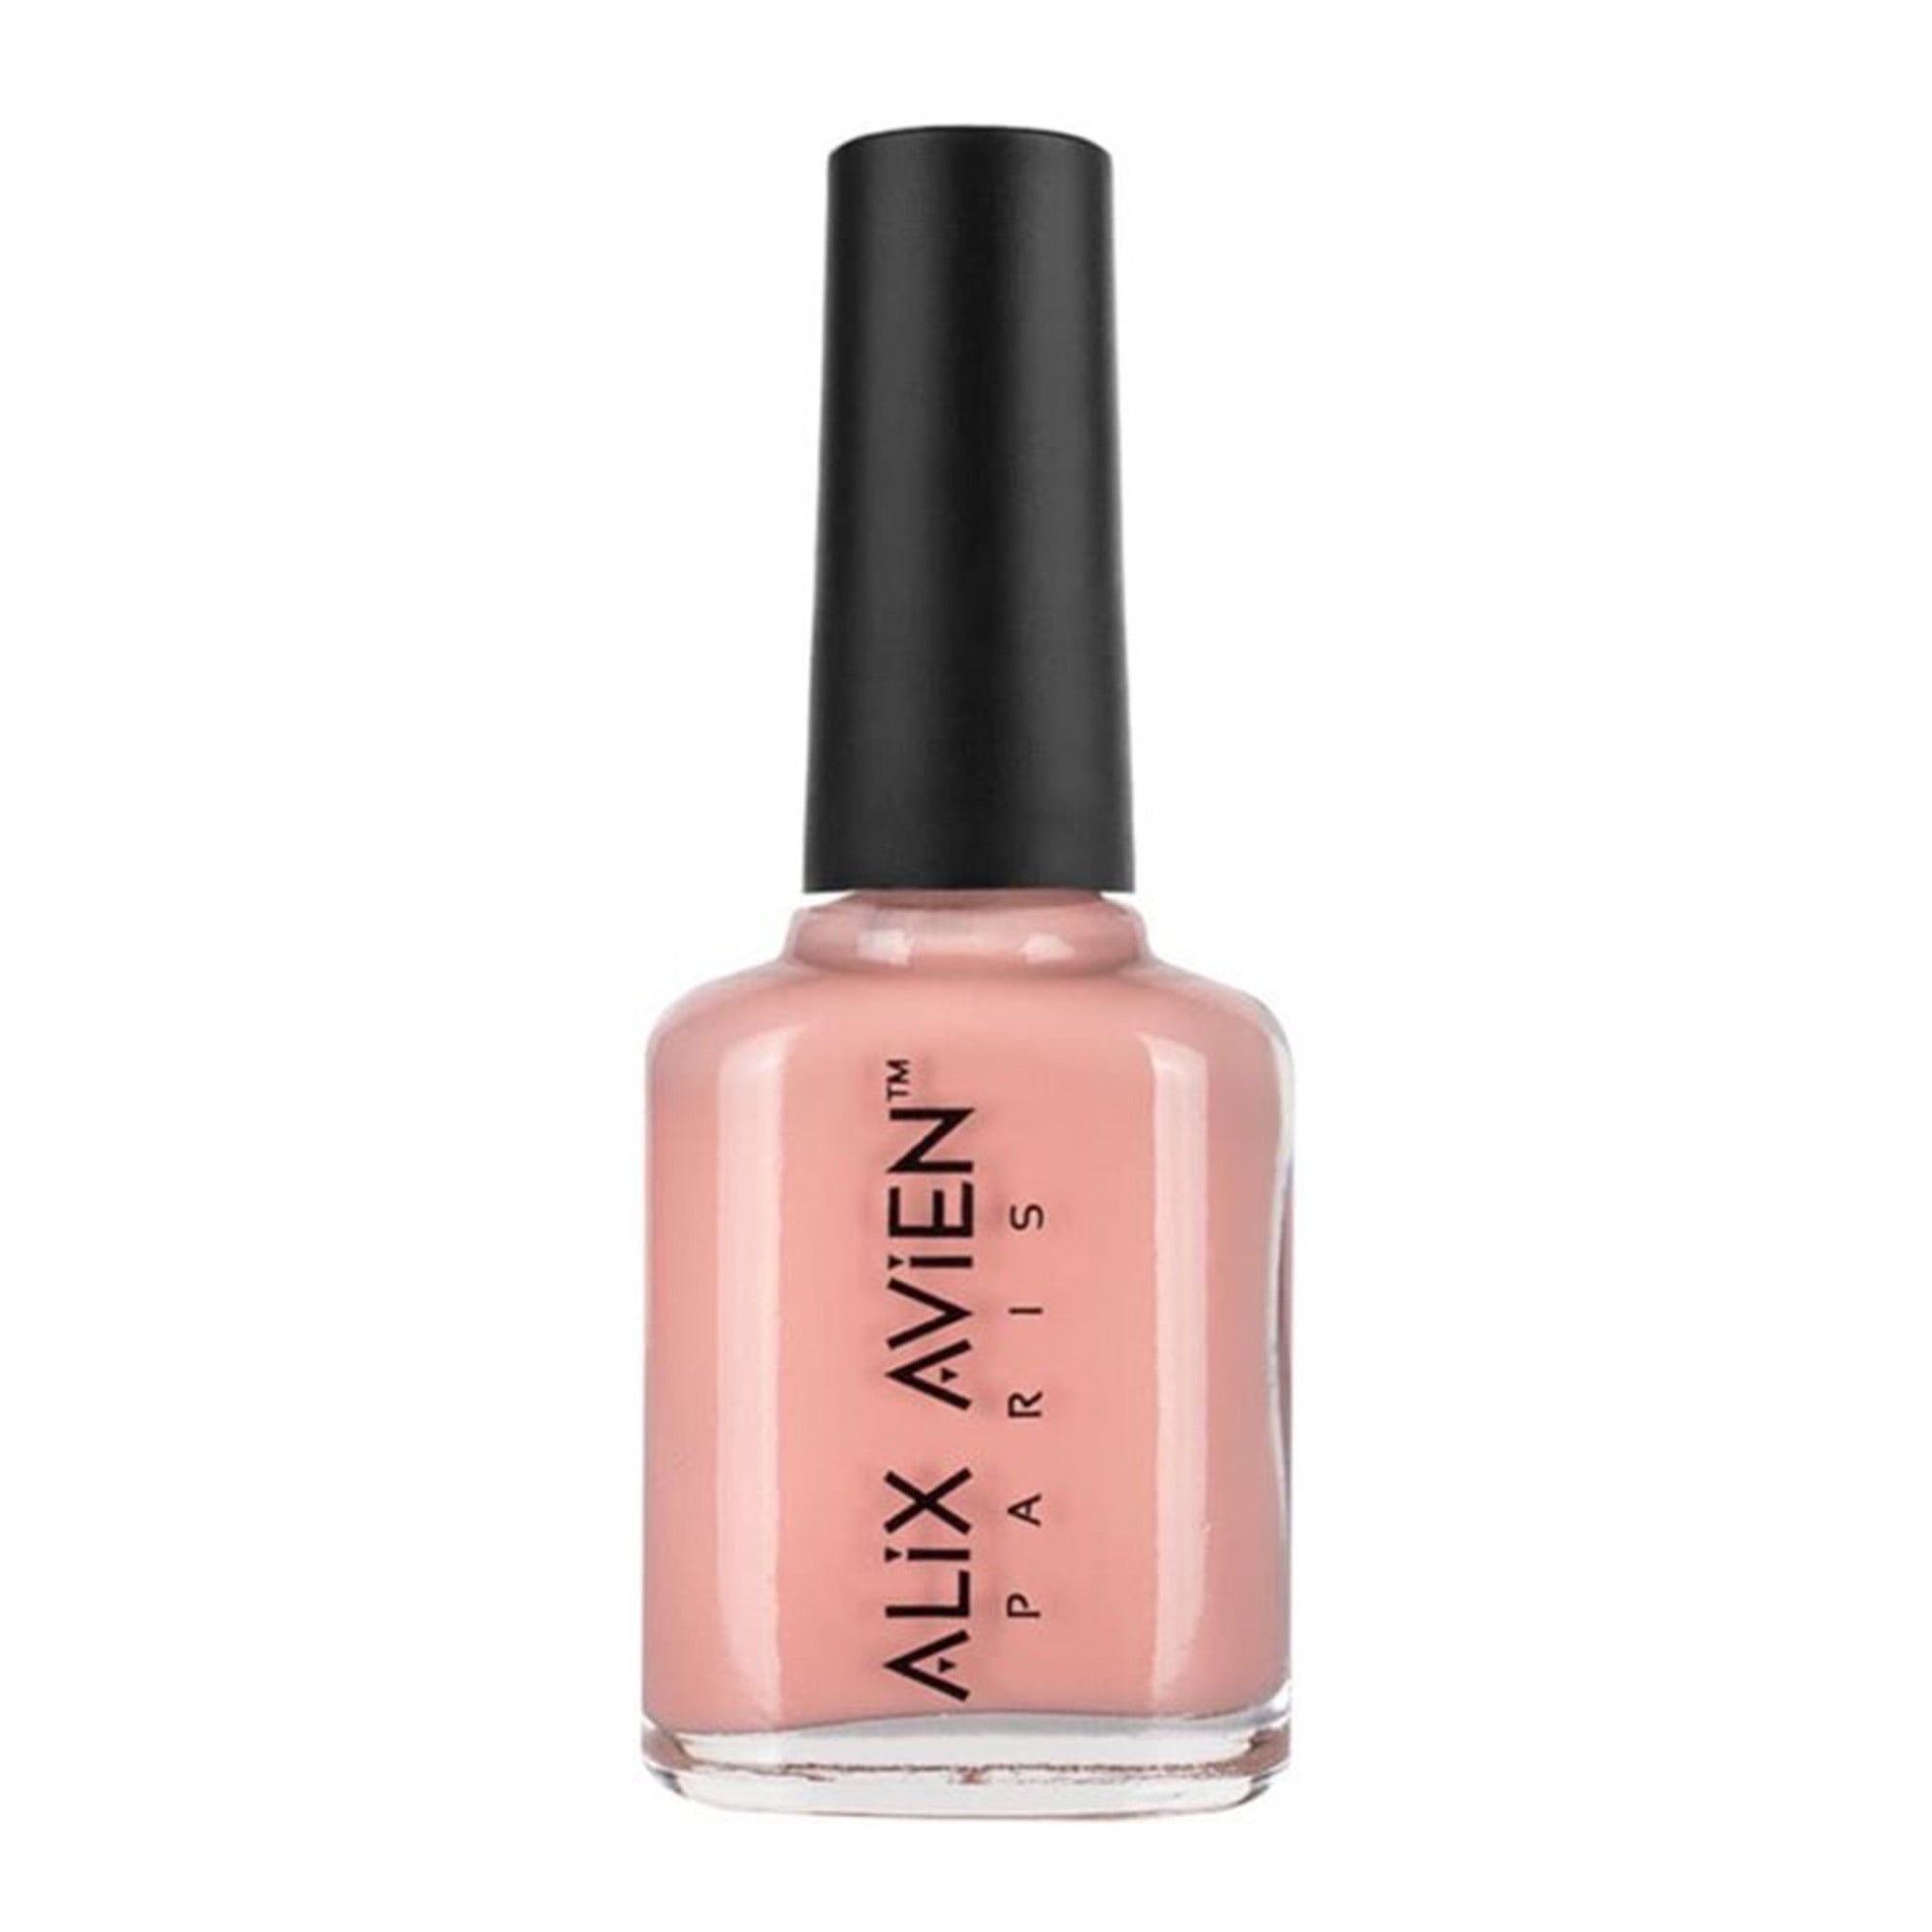 Alix Avien - Nail Polish No.64 (Heavenly Pink)